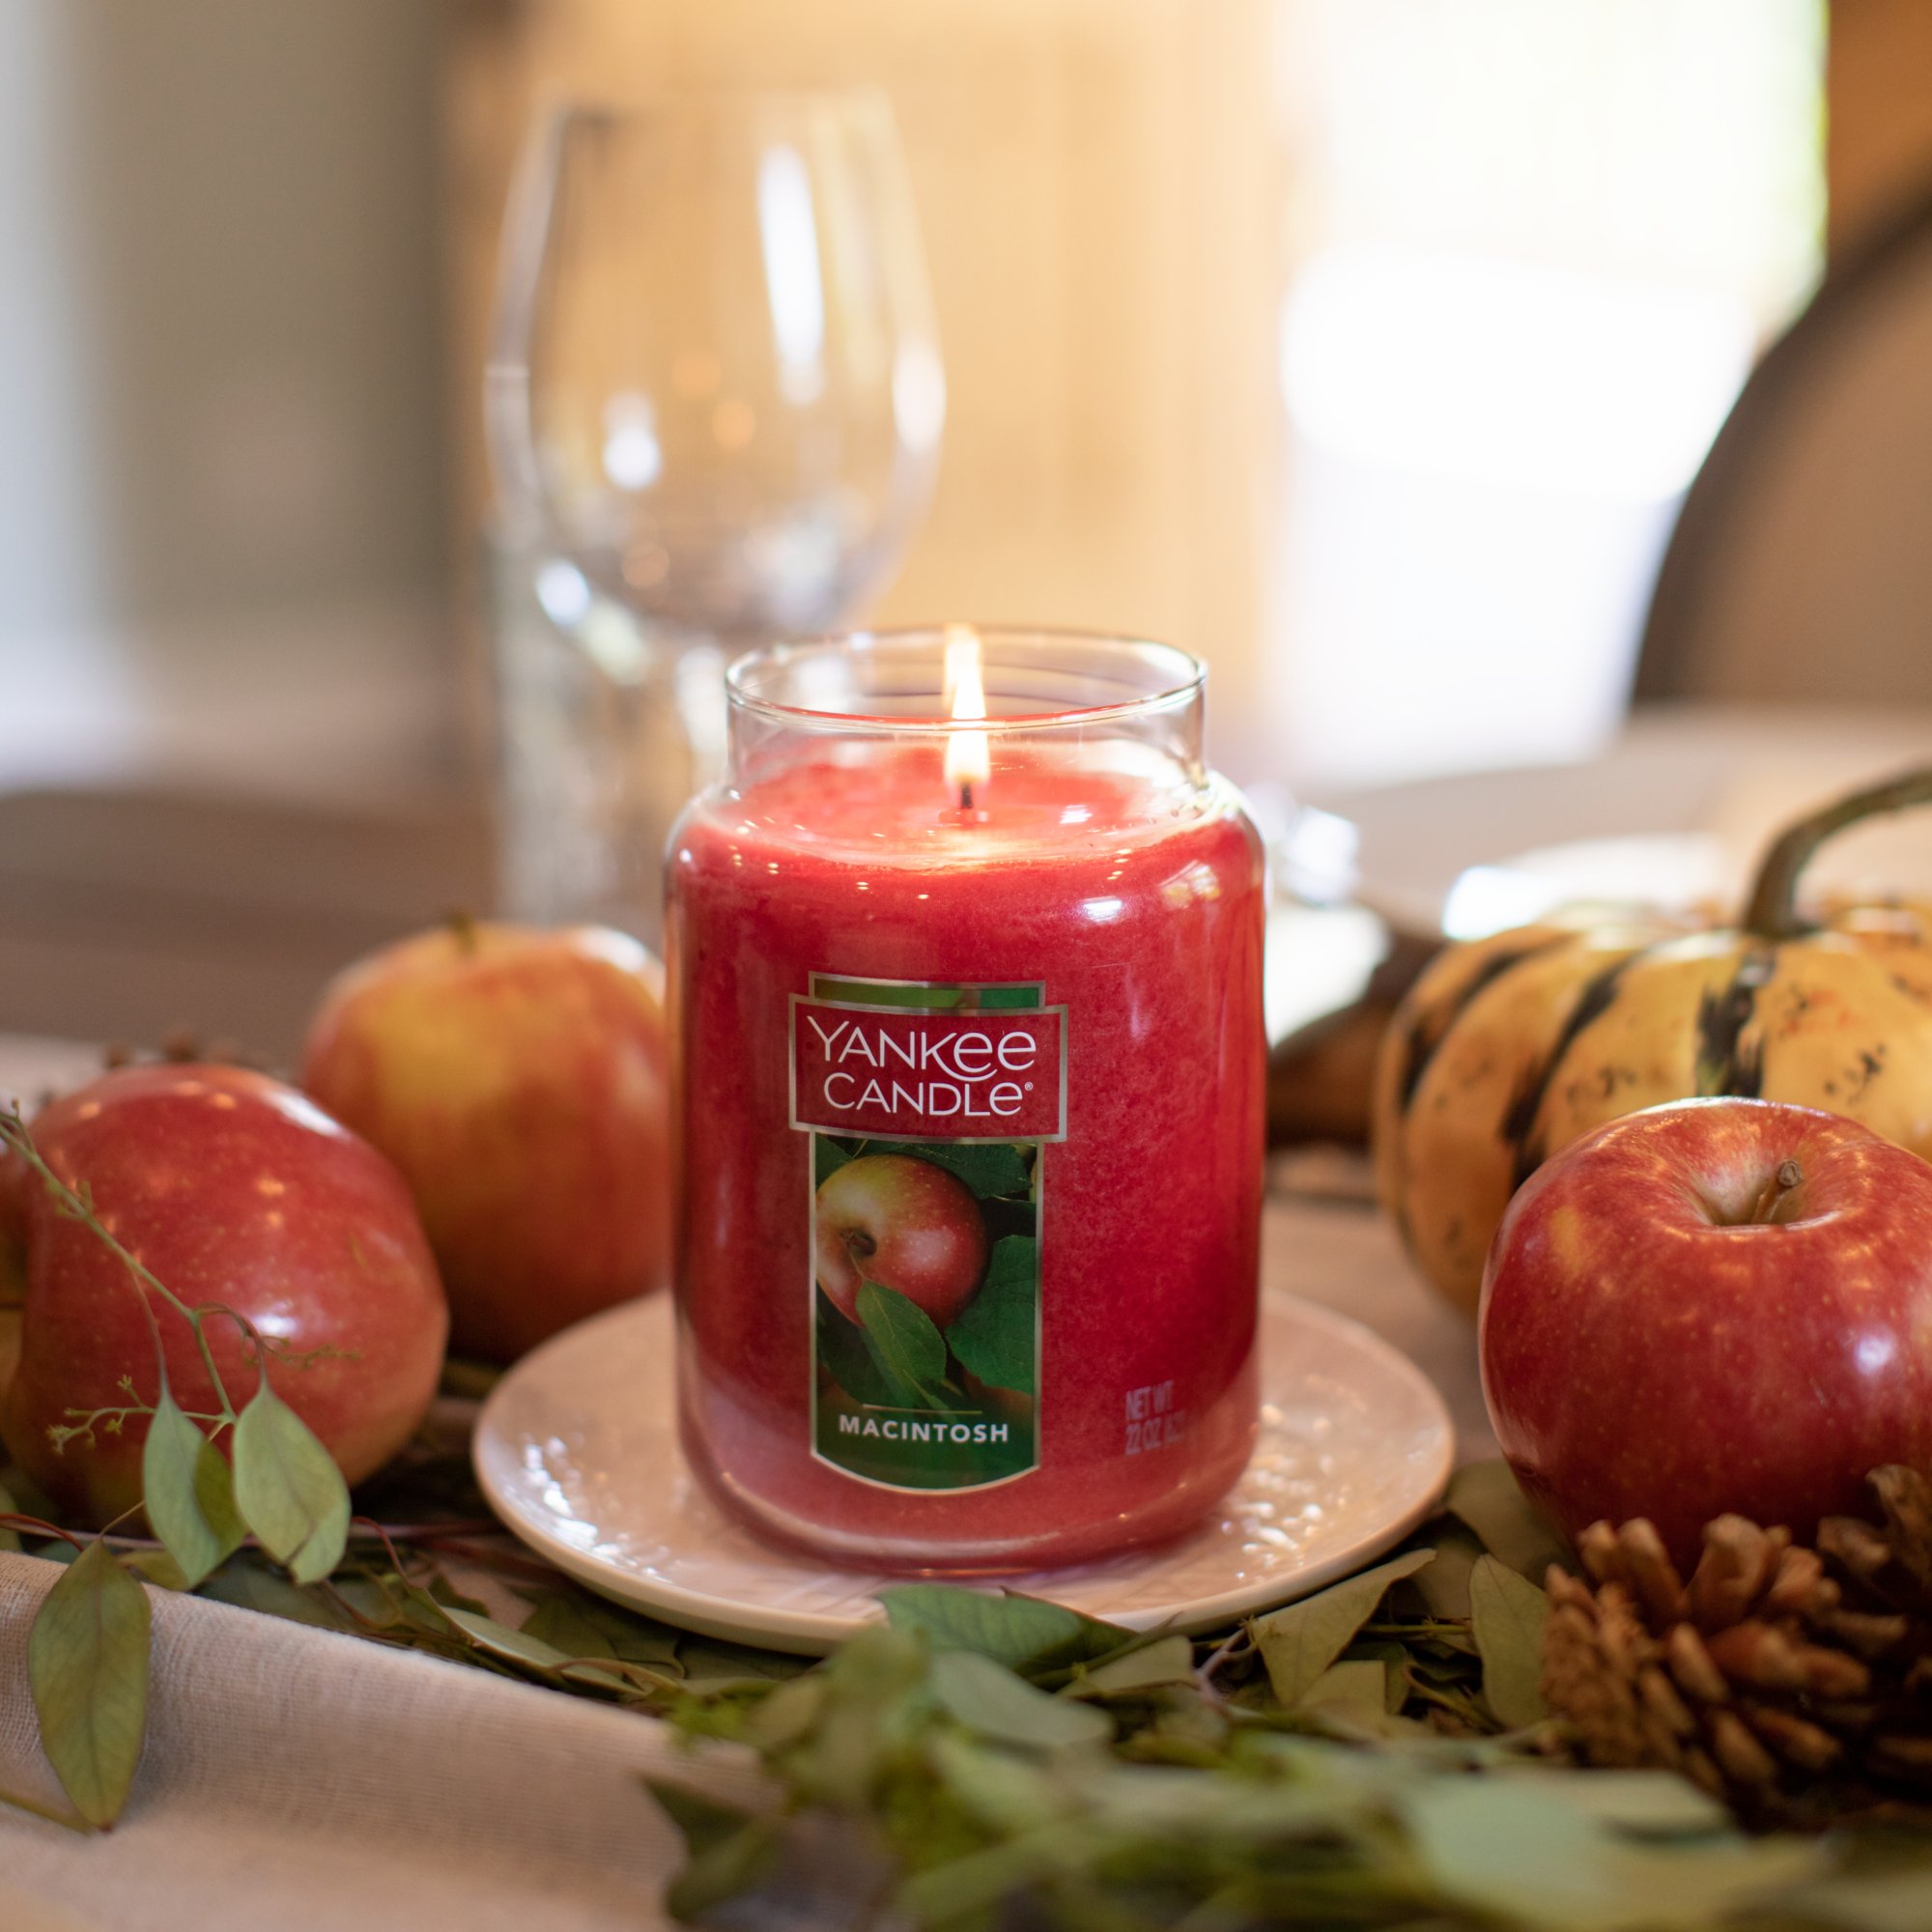 Macintosh Apple – Lebanon Candle Company